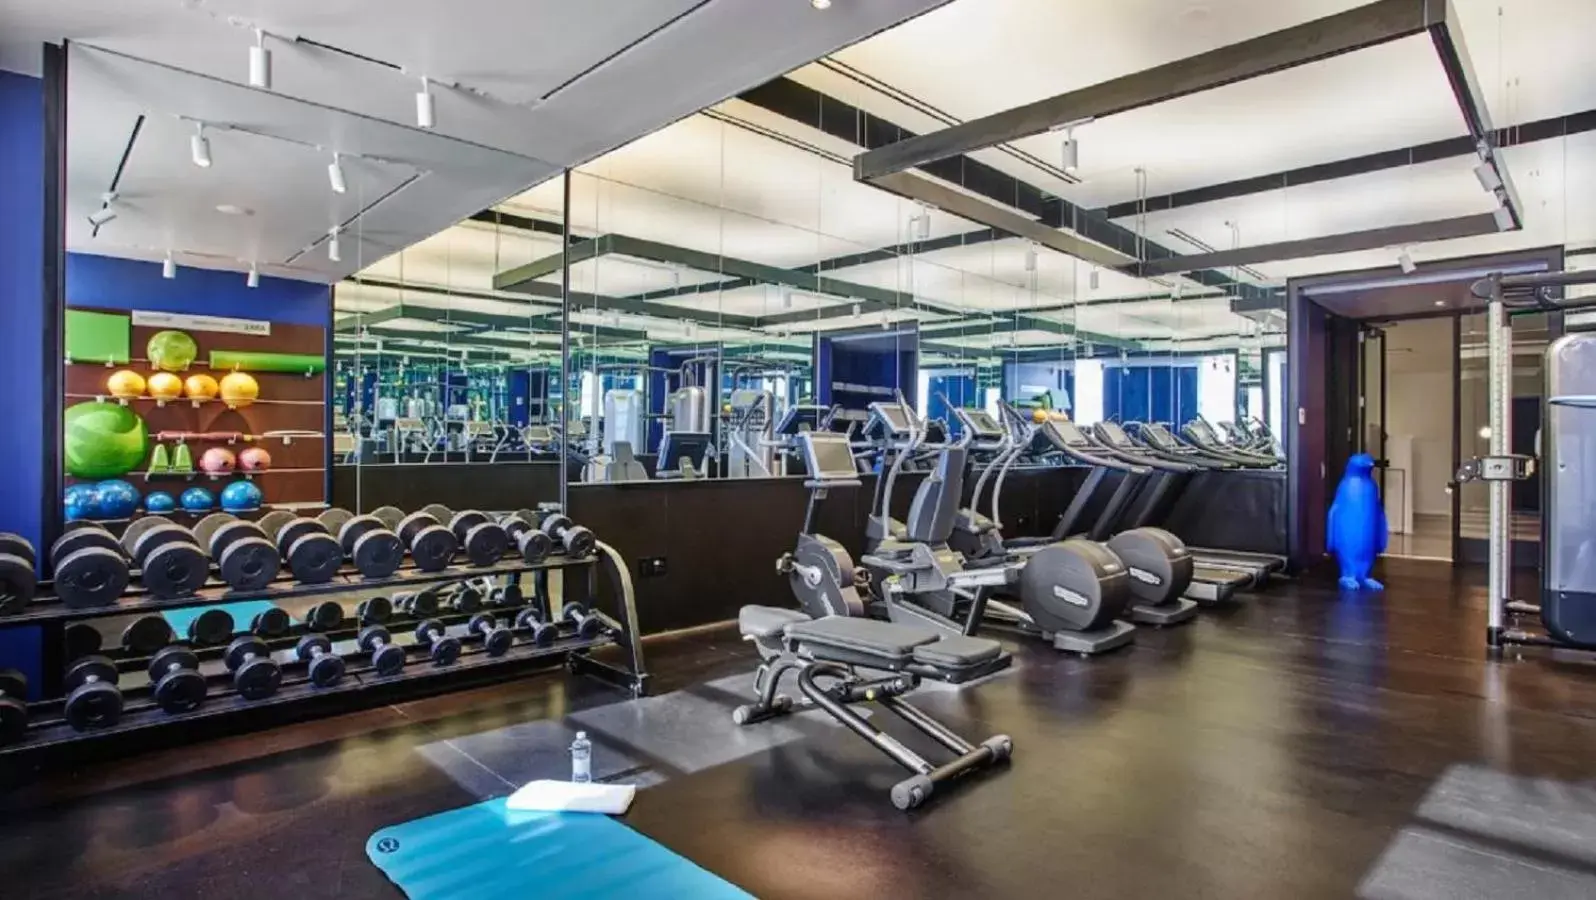 Fitness centre/facilities, Fitness Center/Facilities in 21c Museum Hotel Lexington